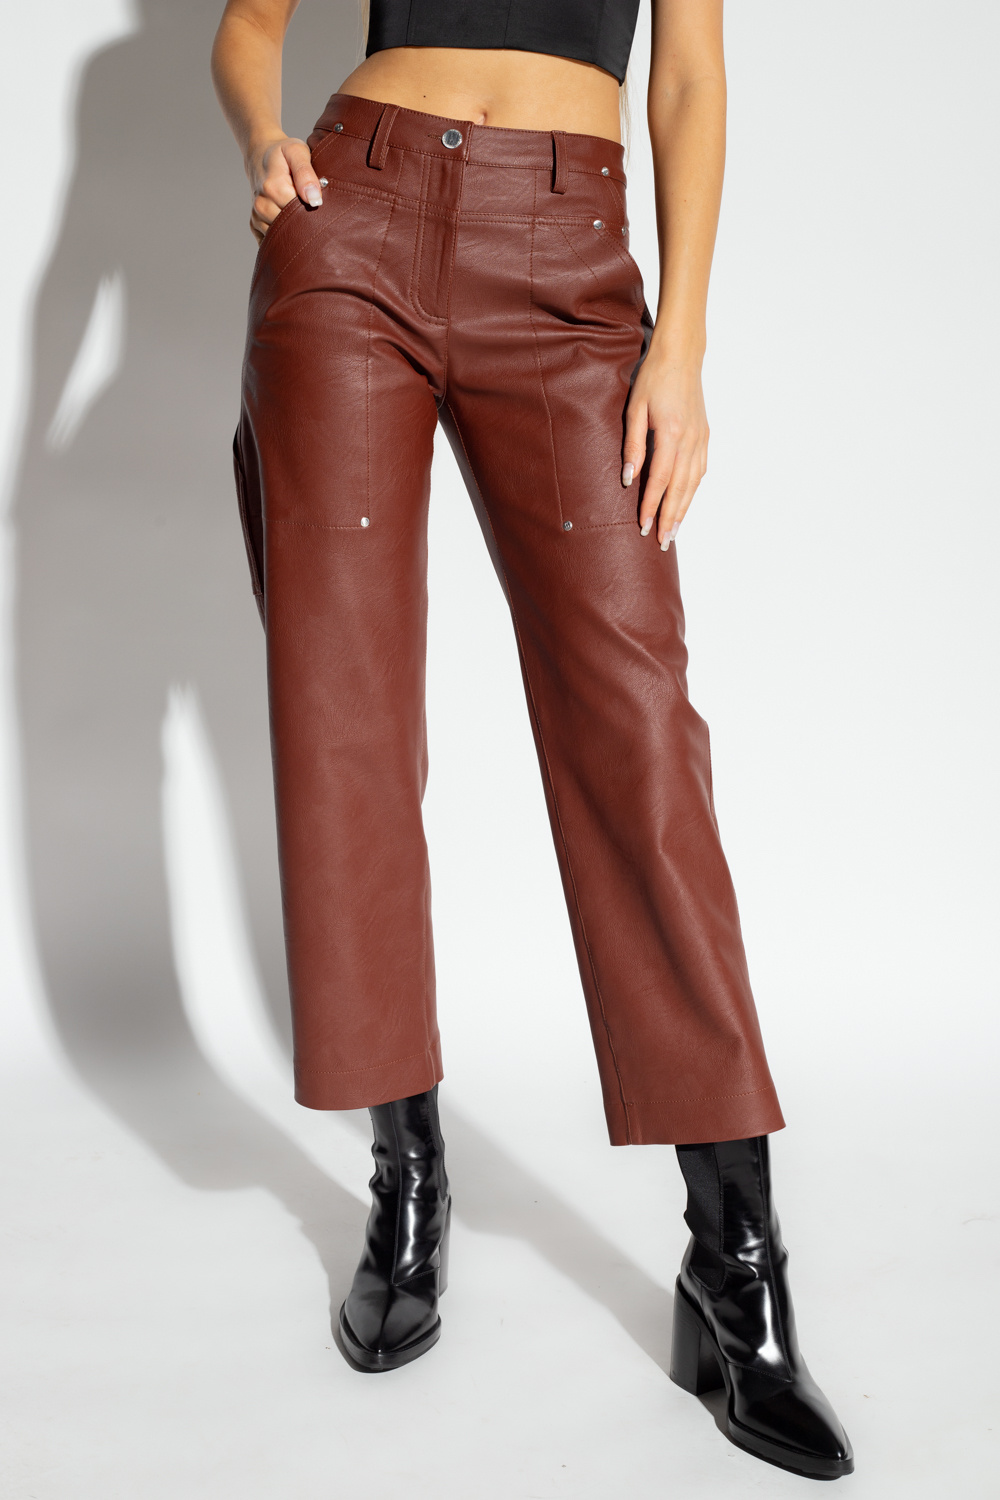 Stella McCartney Vegan leather trousers